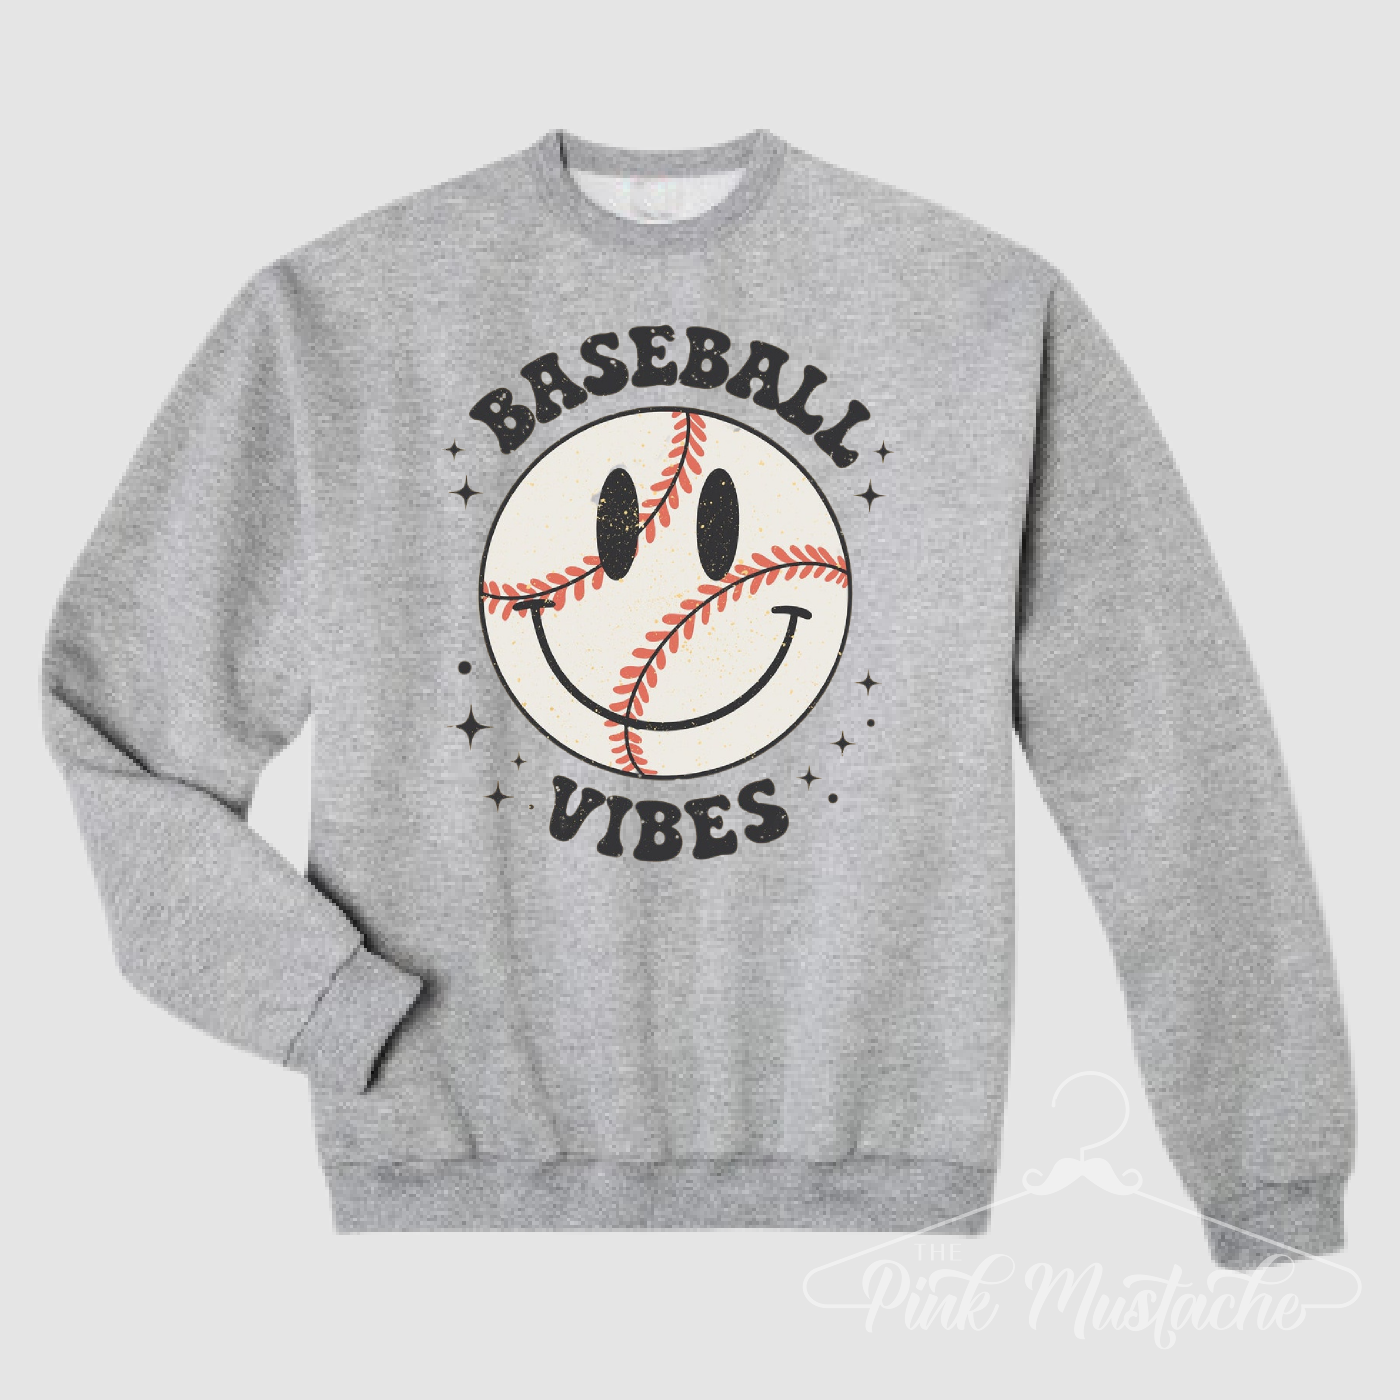 Baseball Vibes Smiley Retro Unisex Sweatshirt - Toddler, Youth, and Adult Sizes Available